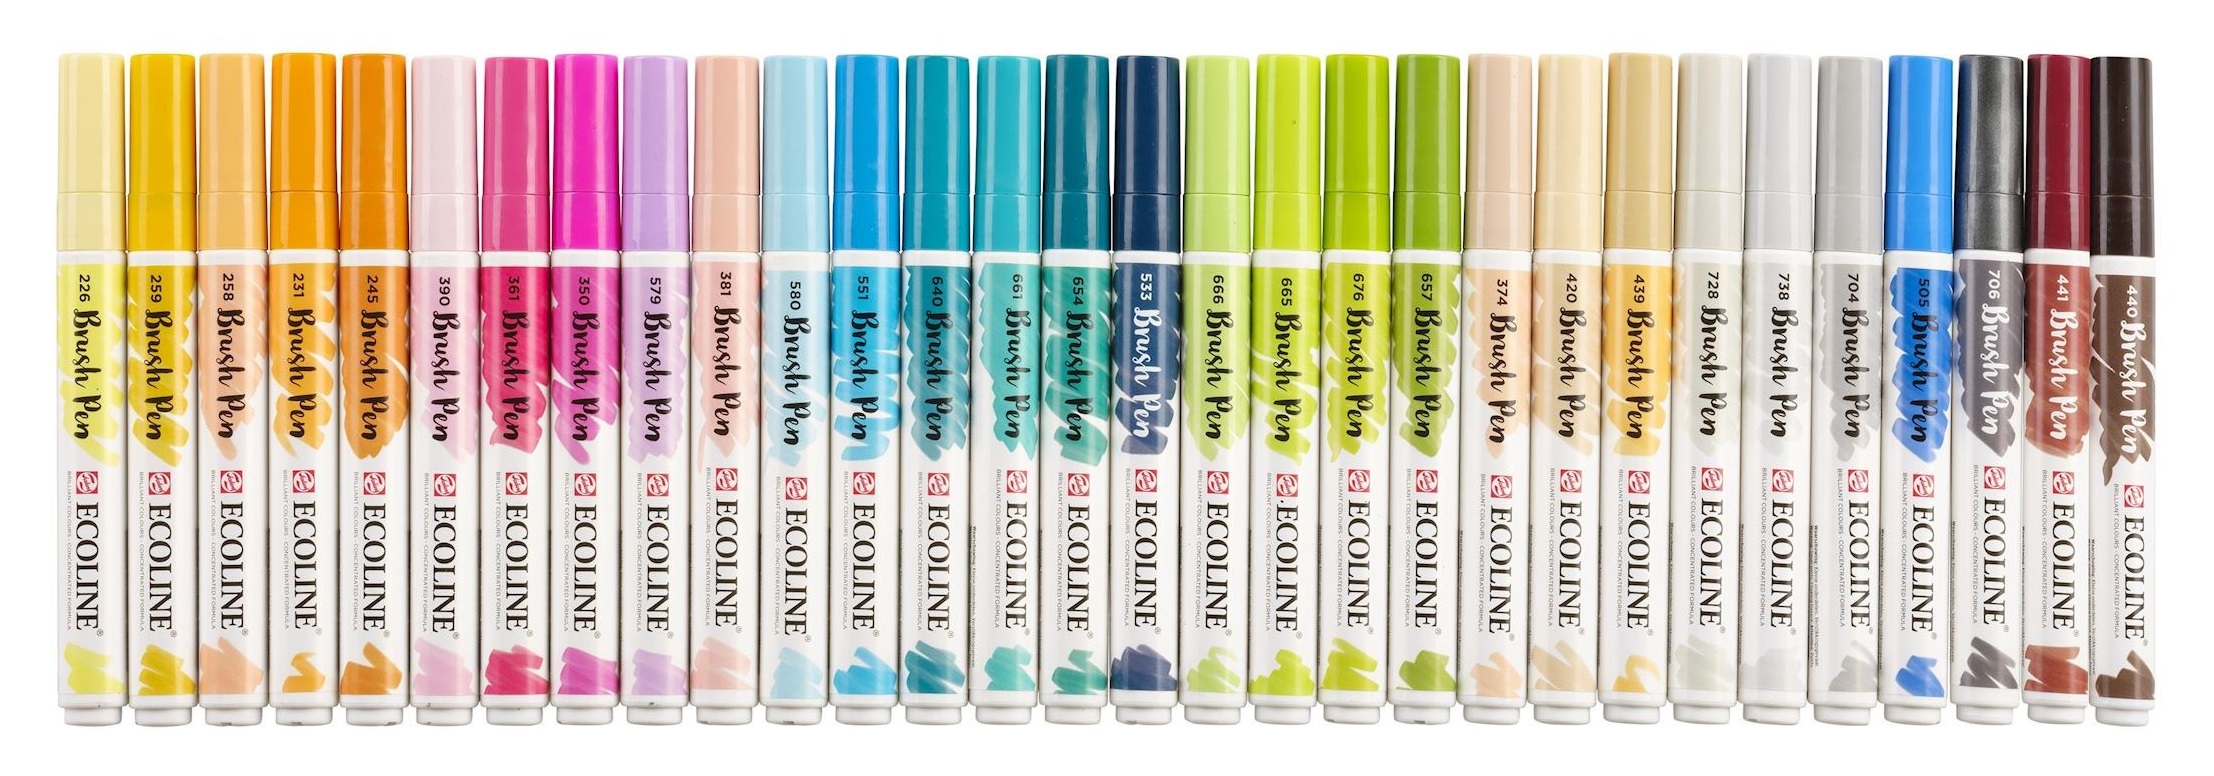 Additional Colors Ecoline Brush Pen Set of 30 11509006 